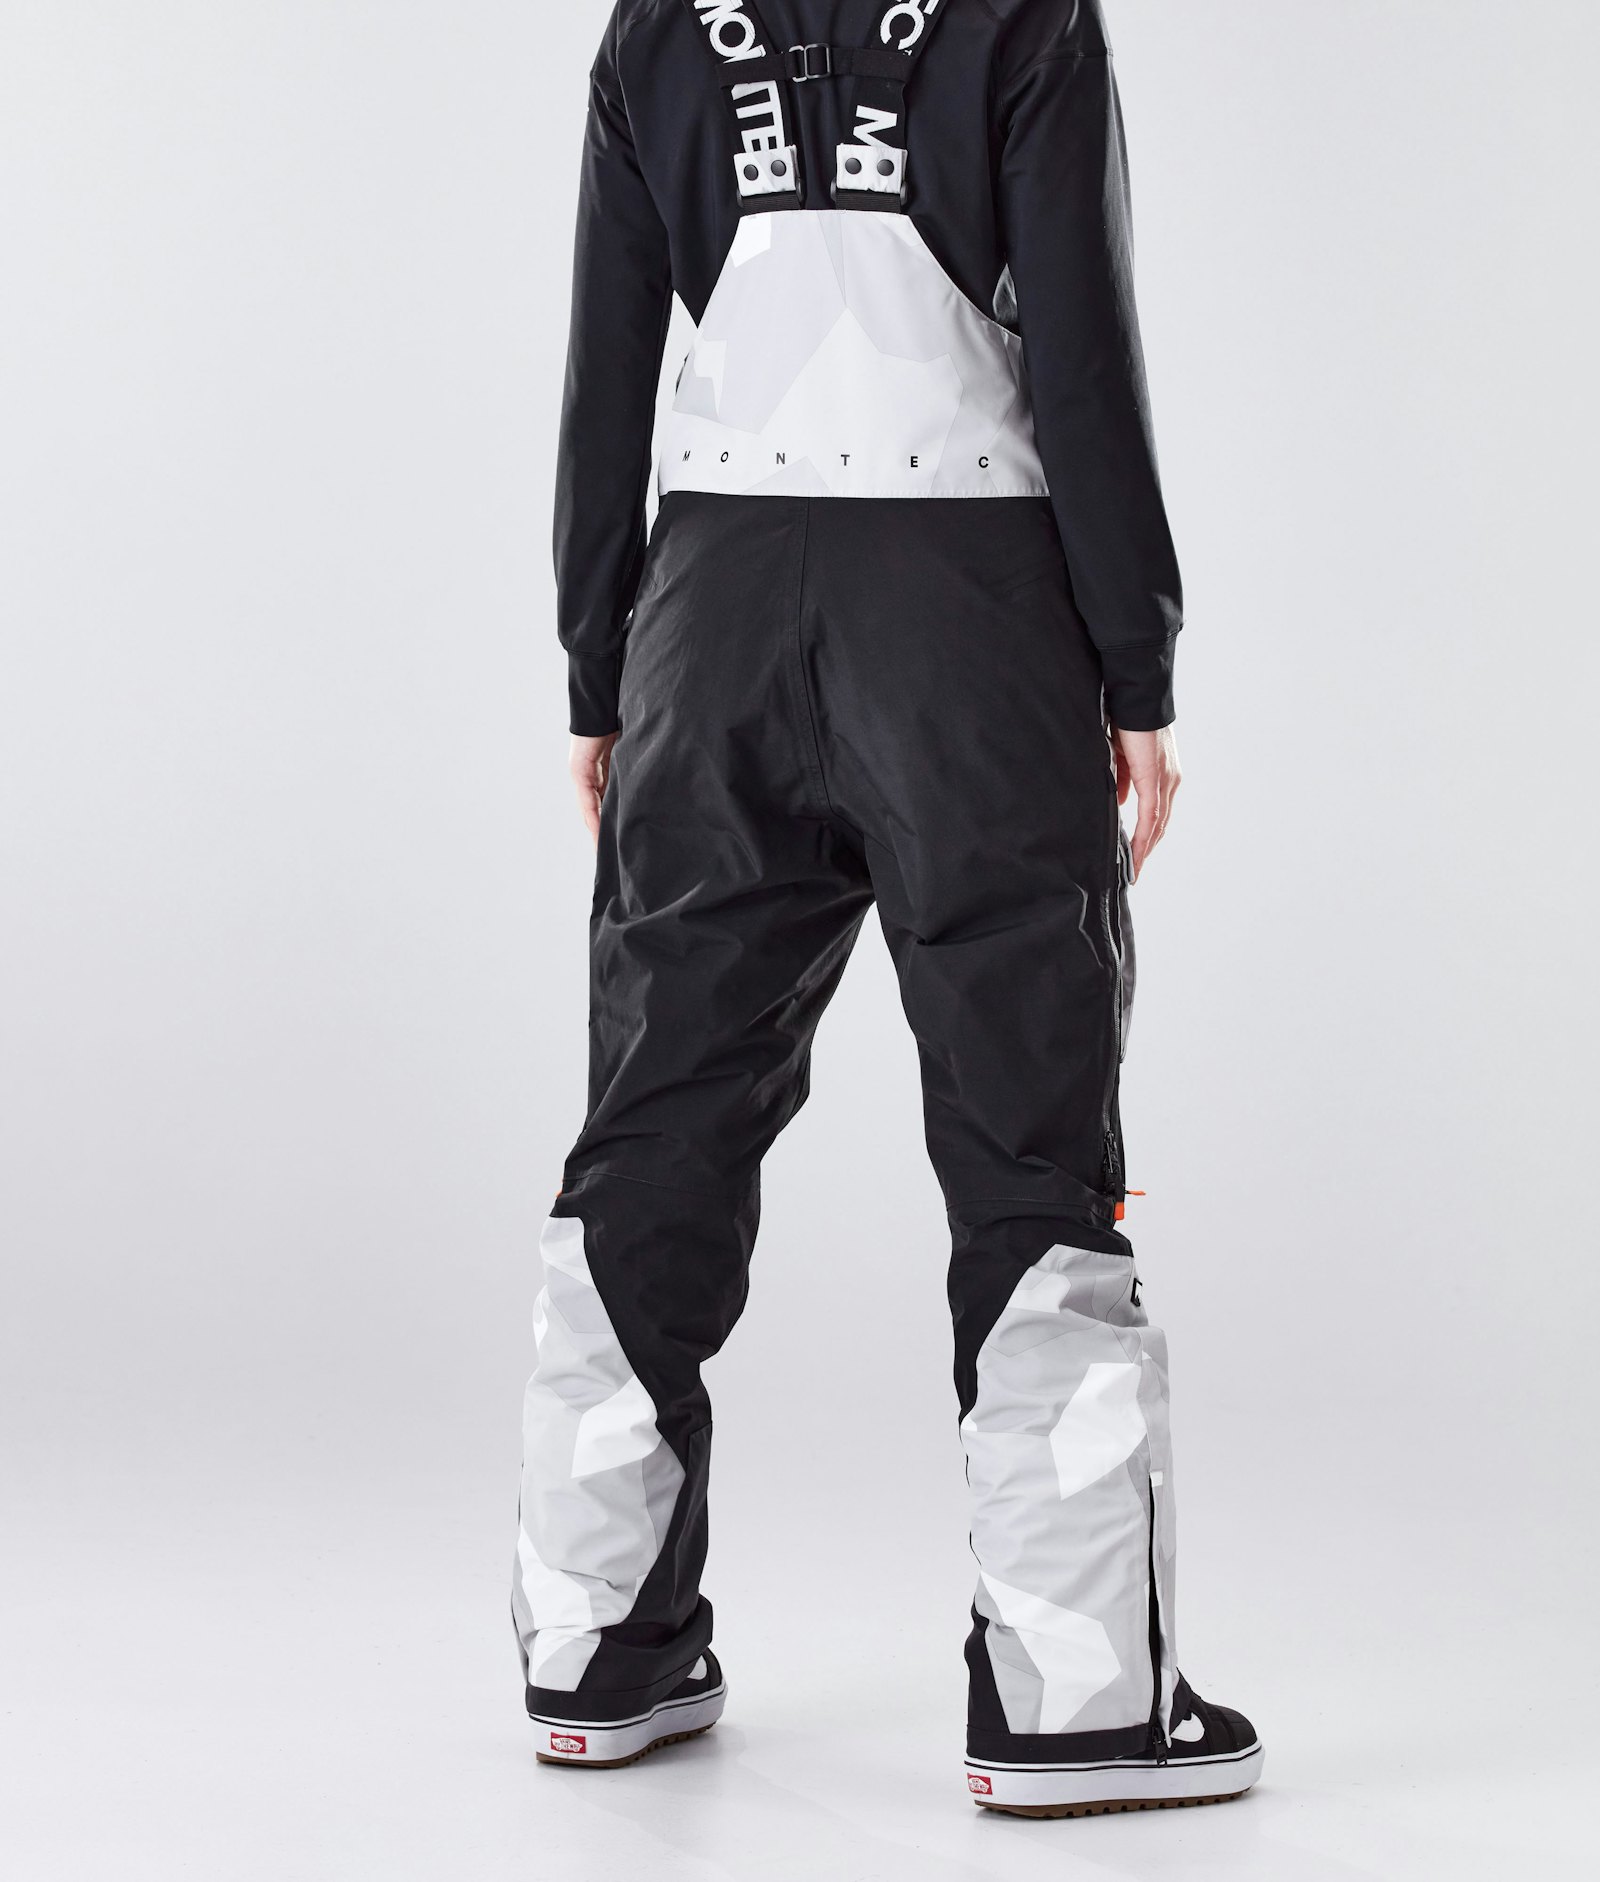 Montec Fawk W 2020 Snowboardhose Damen Snow Camo/Black